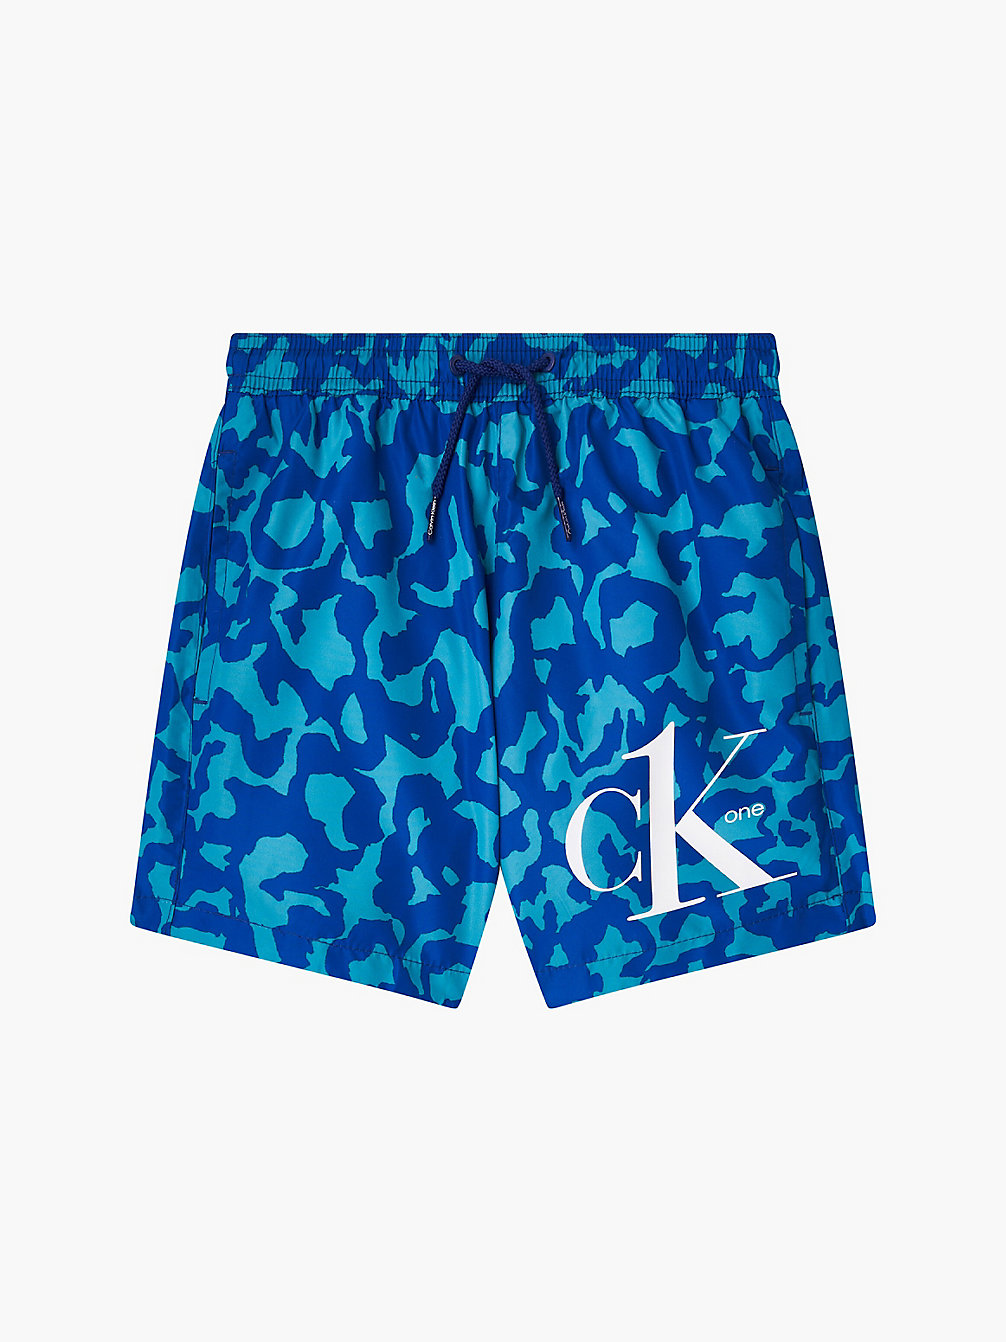 POISON FROG BLUE AOP Boys Swim Shorts - CK One undefined boys Calvin Klein